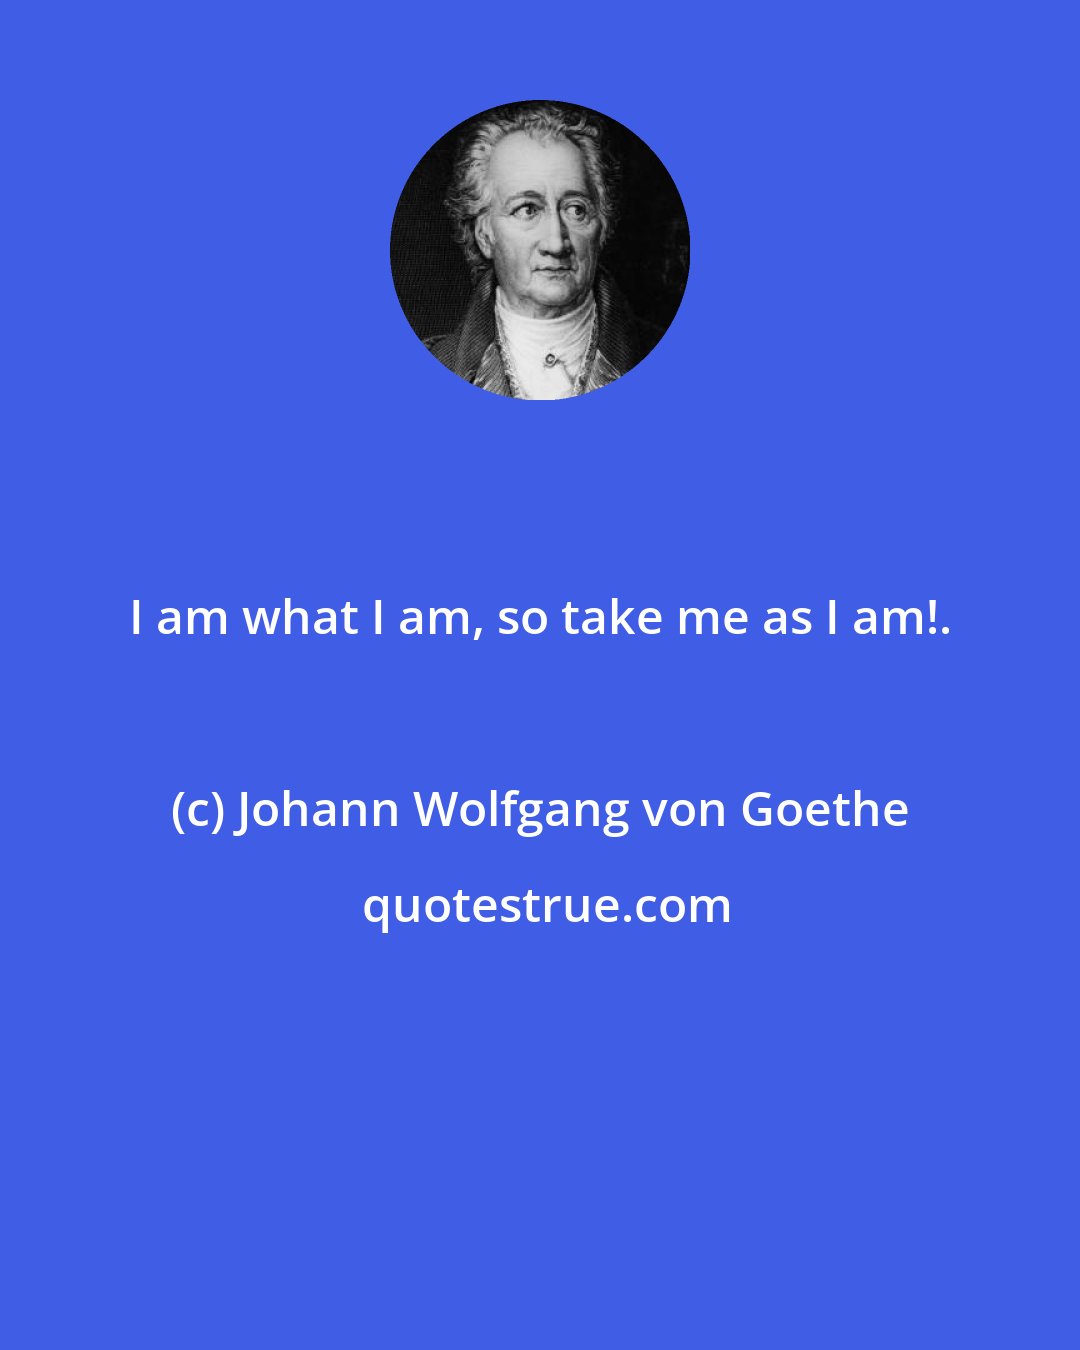 Johann Wolfgang von Goethe: I am what I am, so take me as I am!.